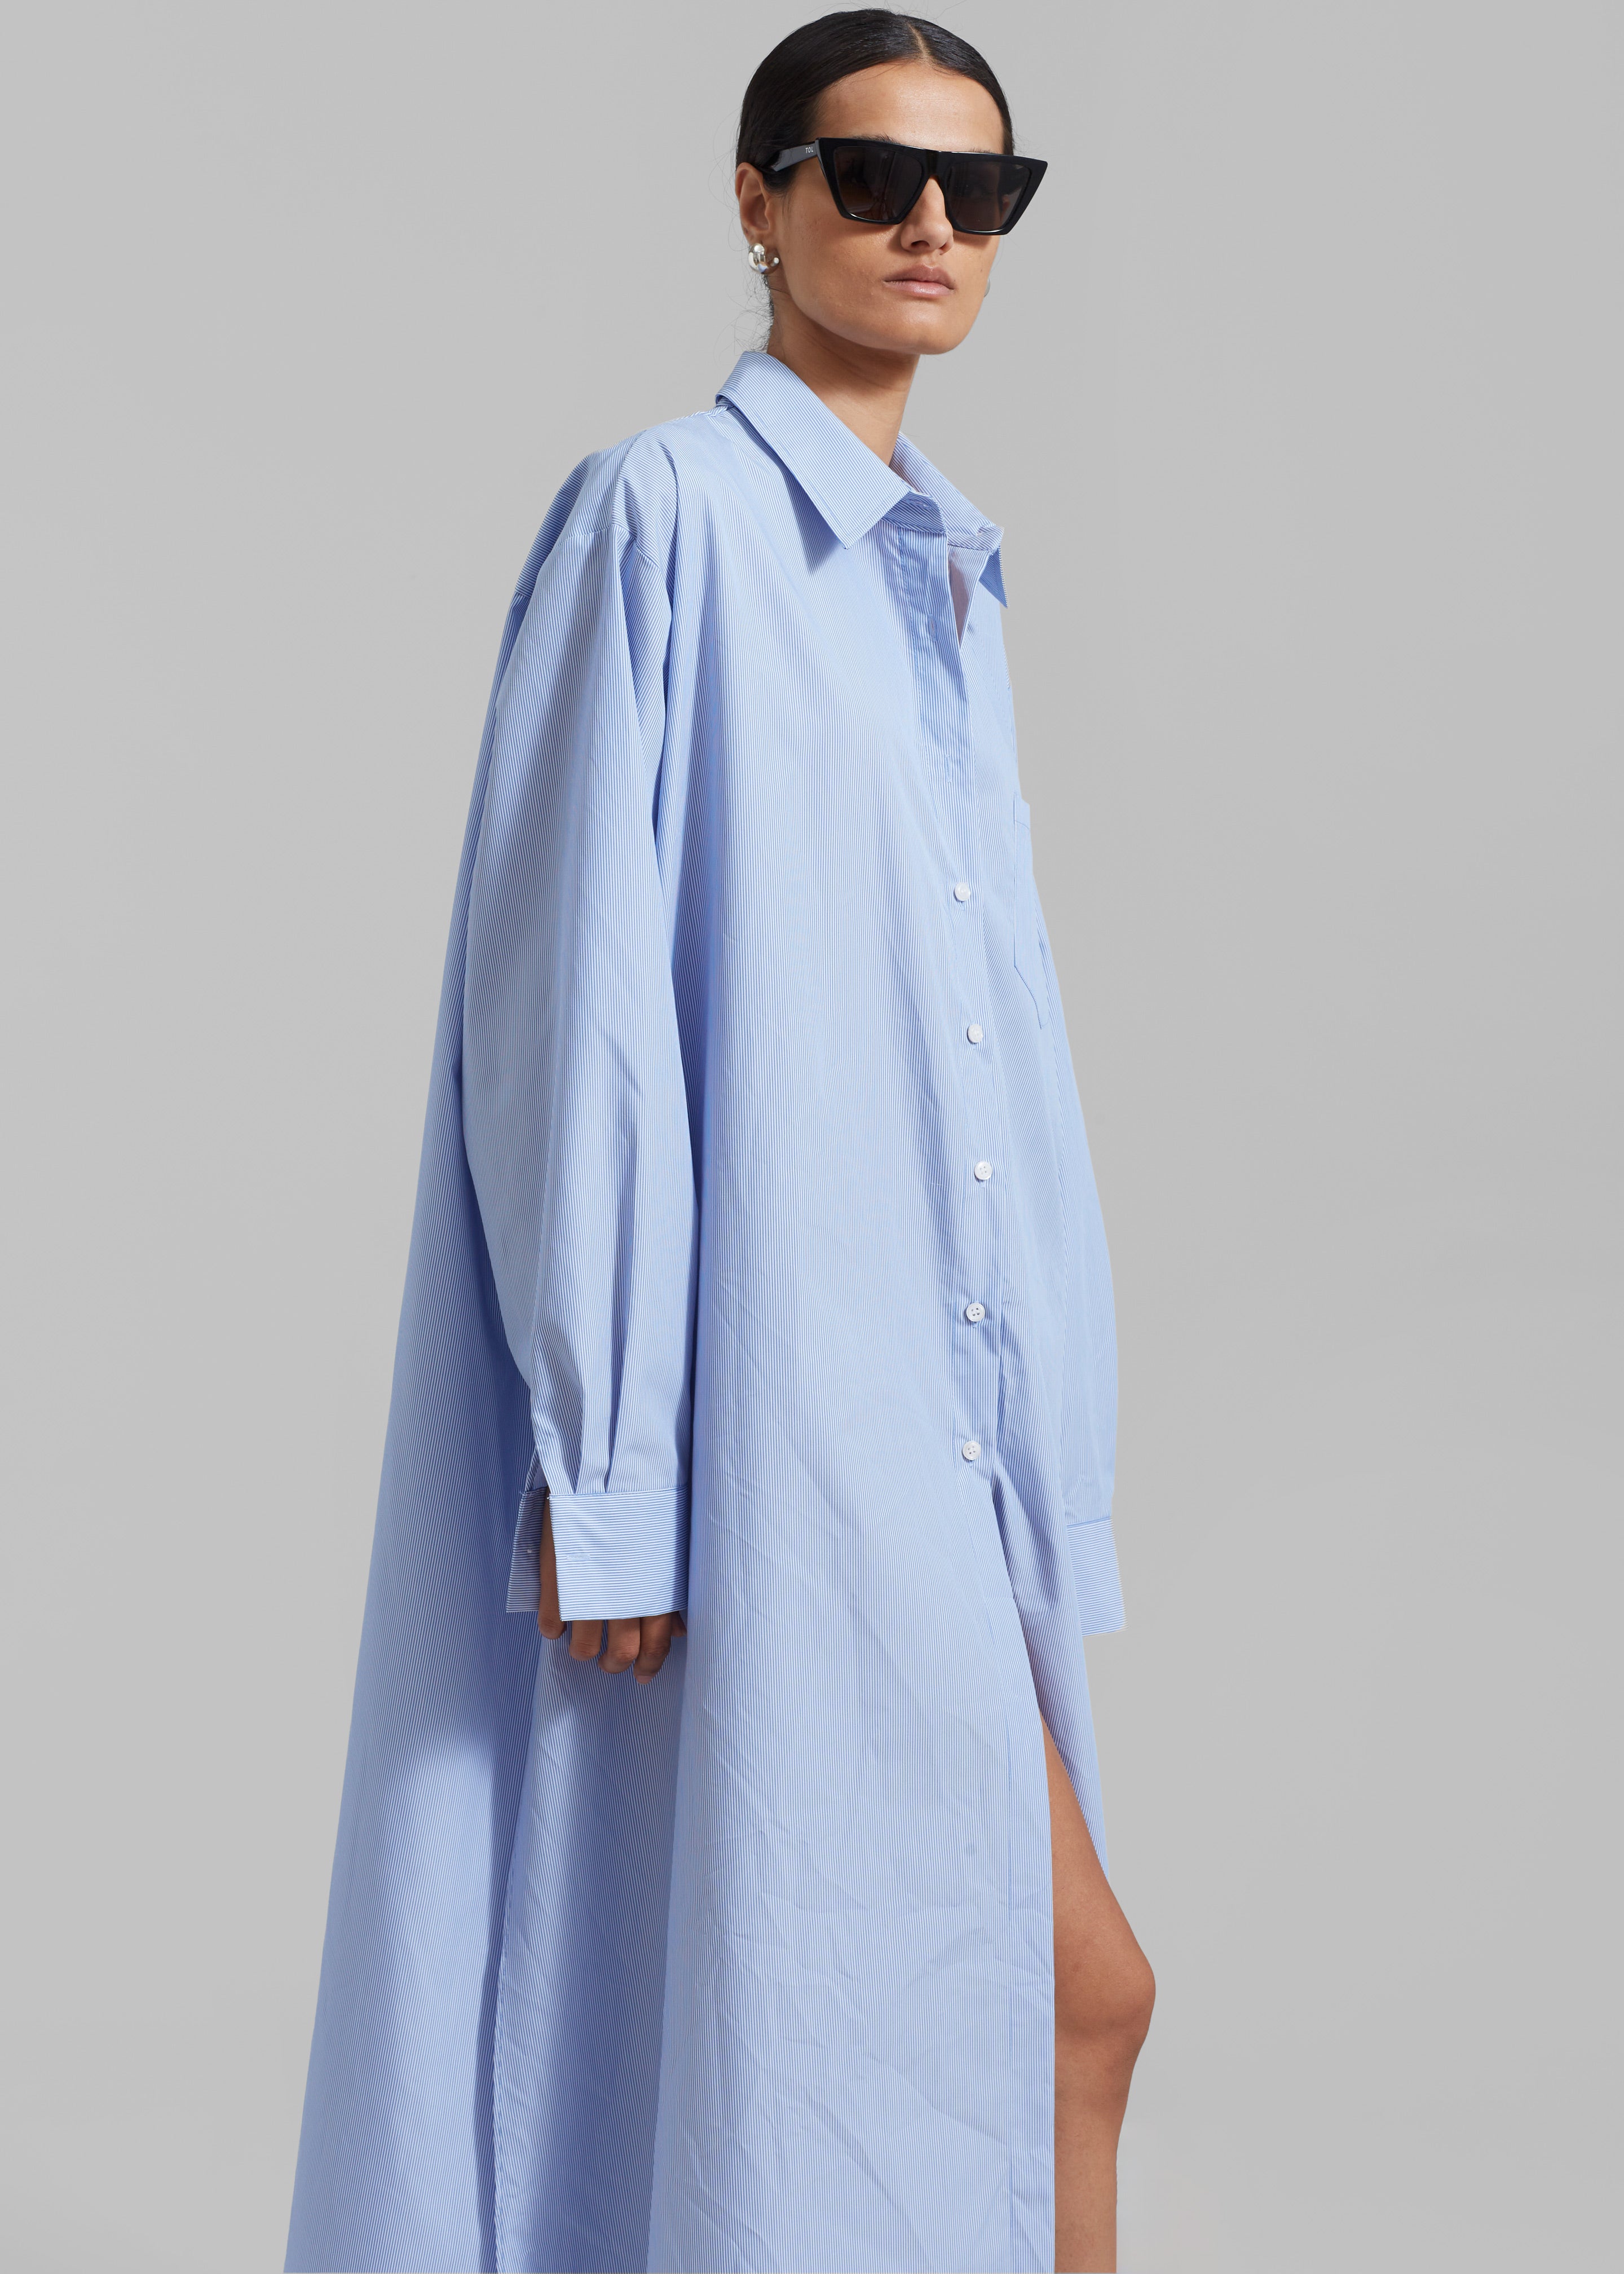 Avery Shirt Dress - Blue Stripe - 1